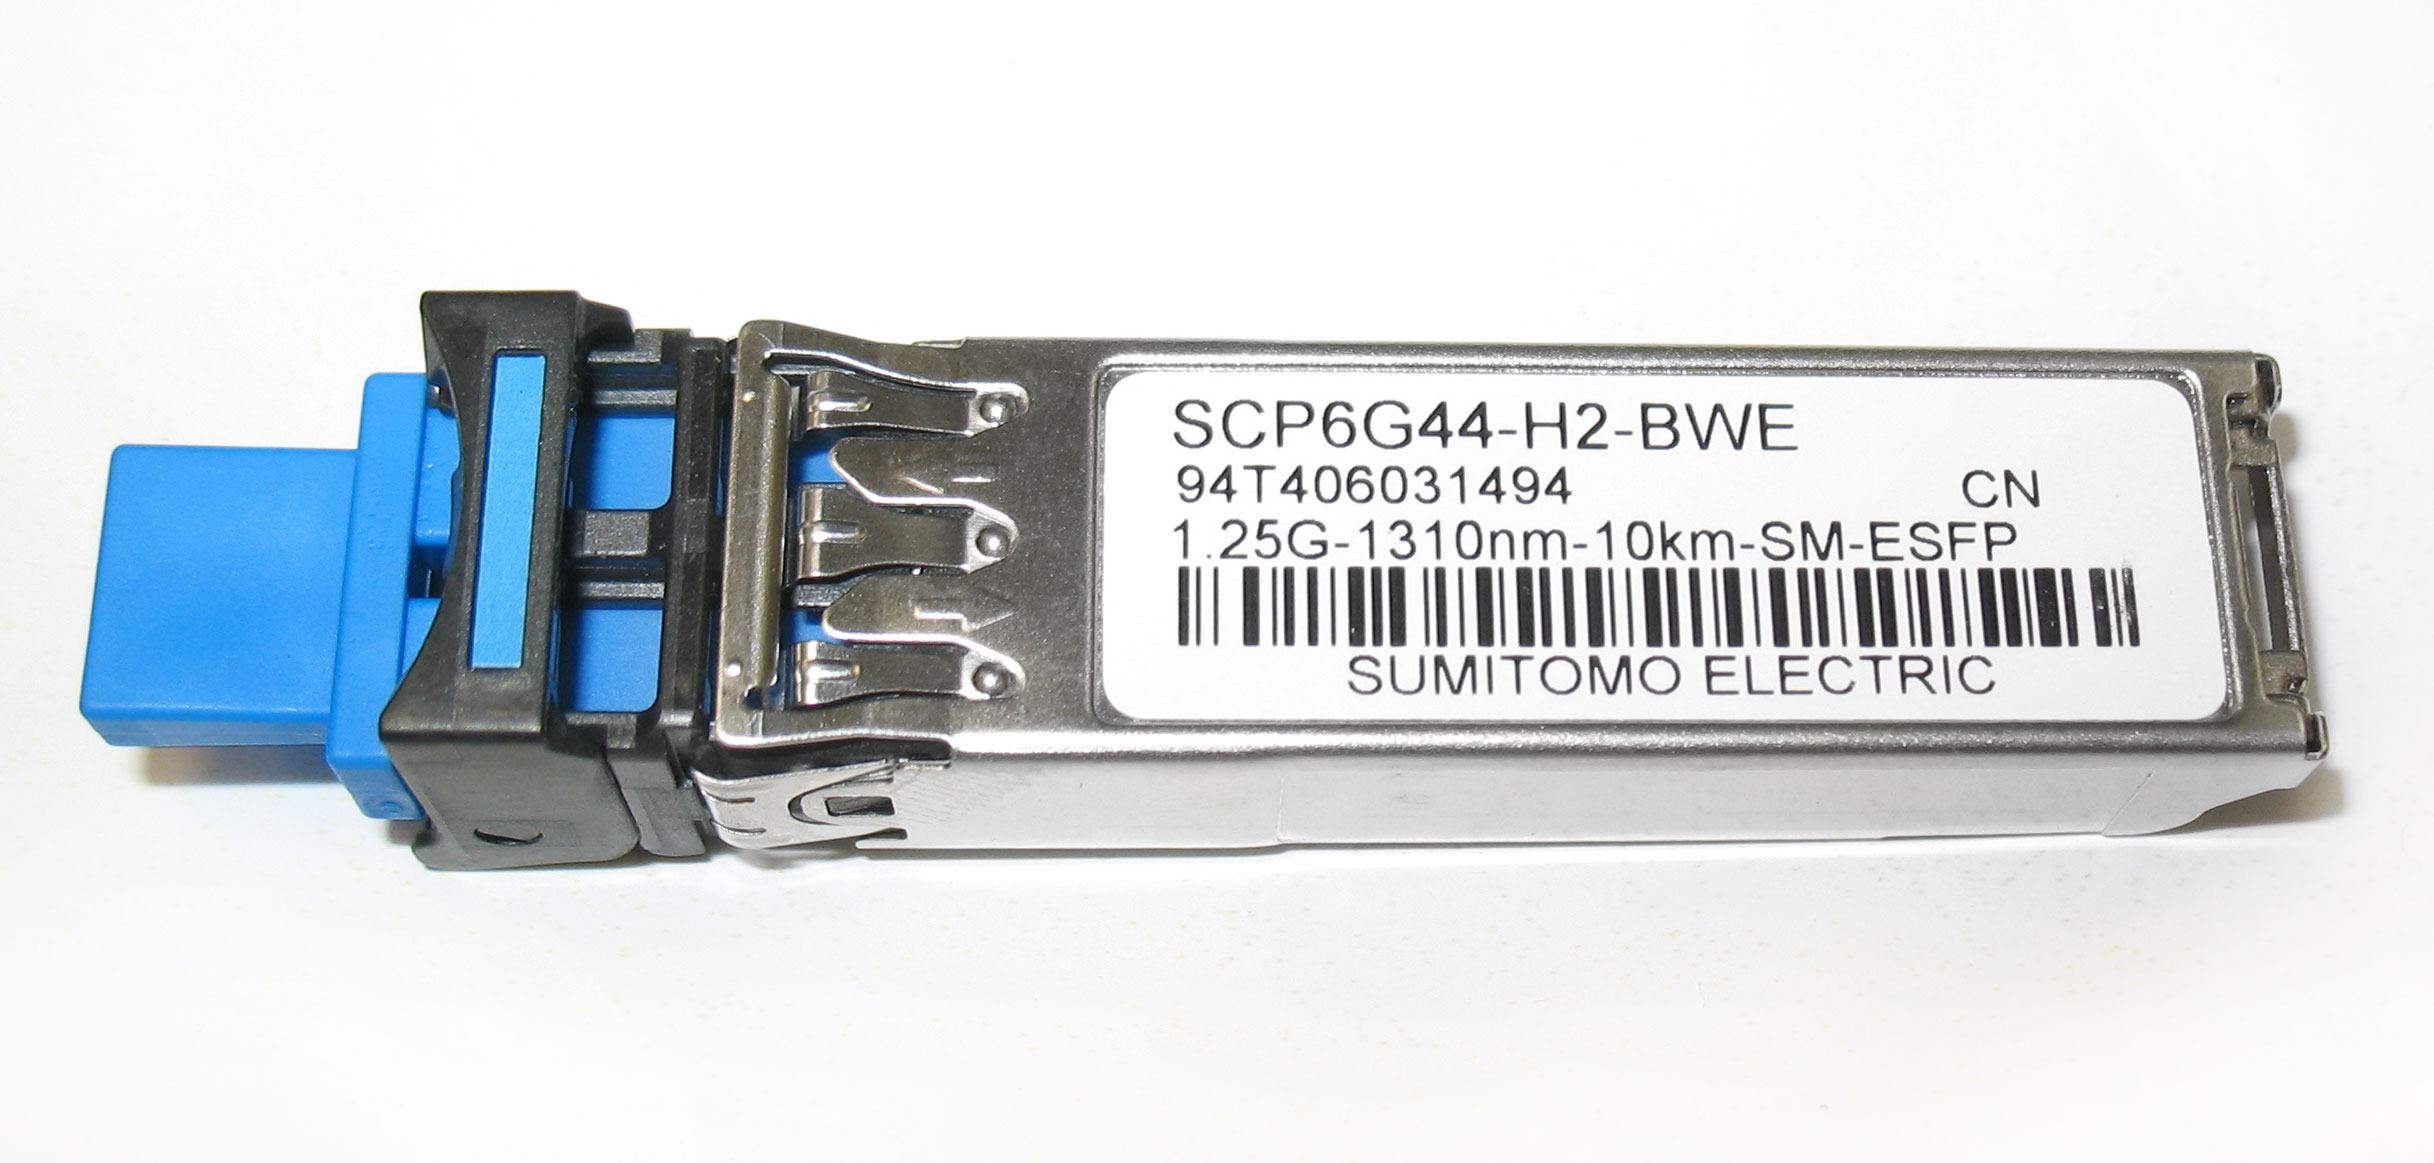 Sumitomo Electric SCP6G44-H2-BWE